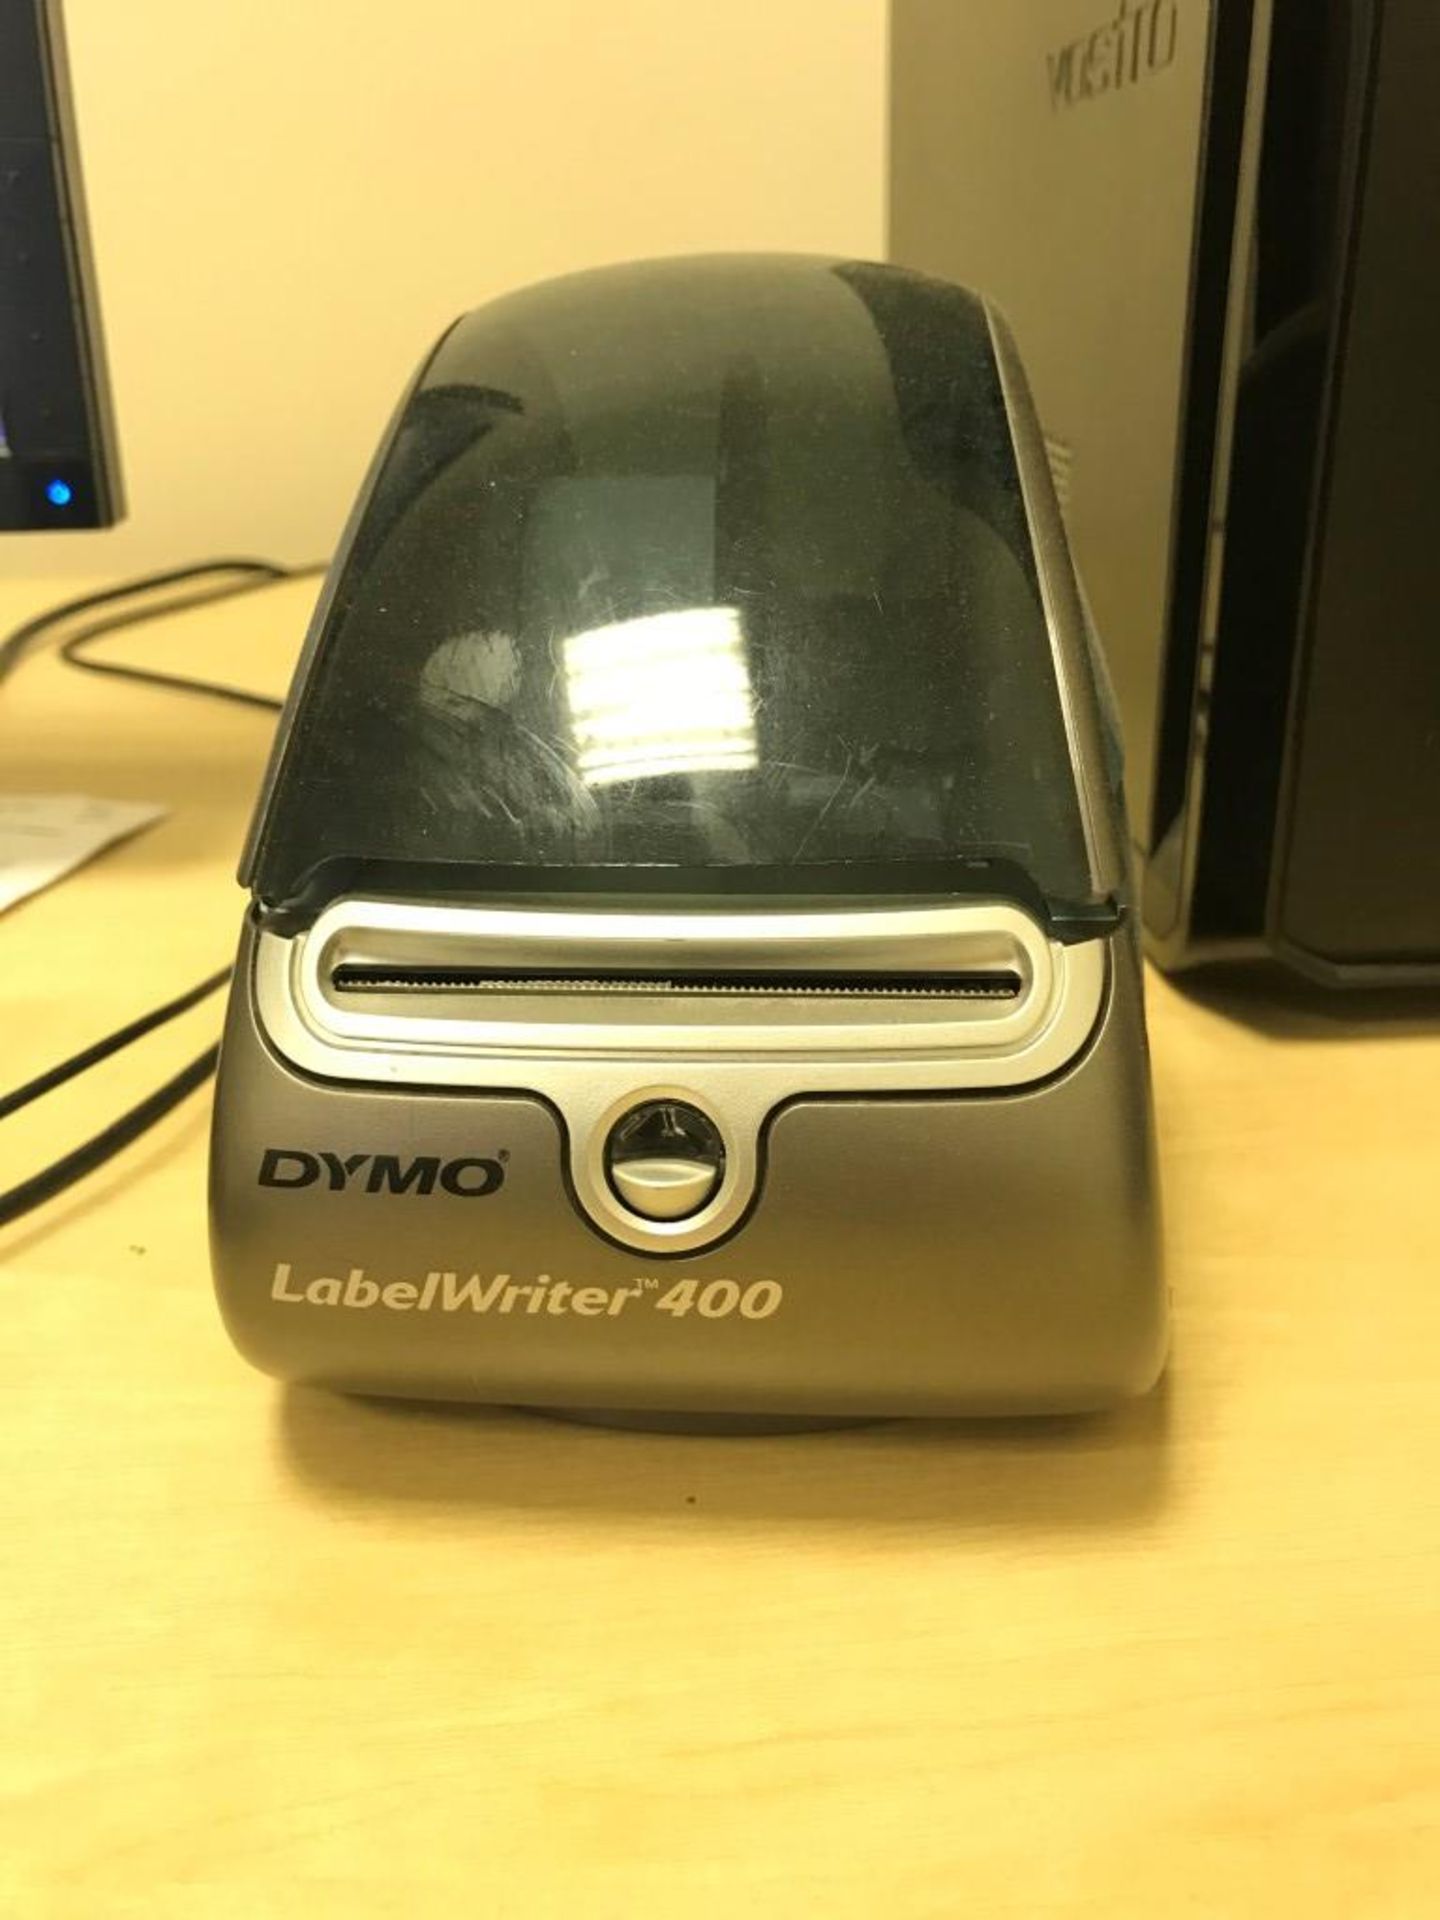 Dymo label write 400 label printer and Paket 40 digital weighing scales